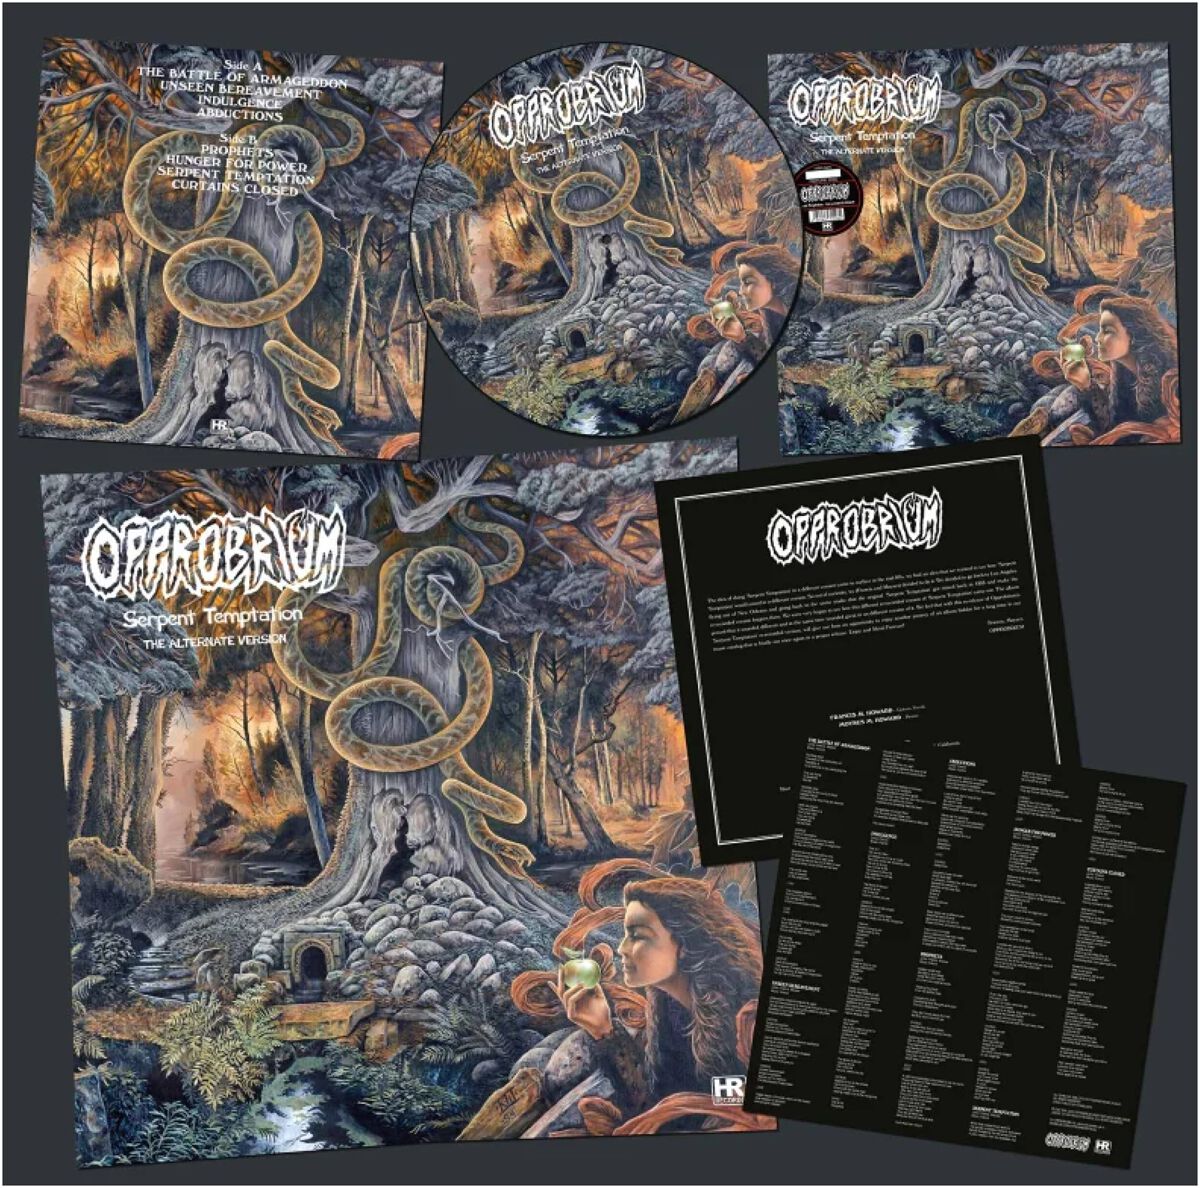 Opprobrium Serpent temptation - The Alternate Version 1996 LP multicolor